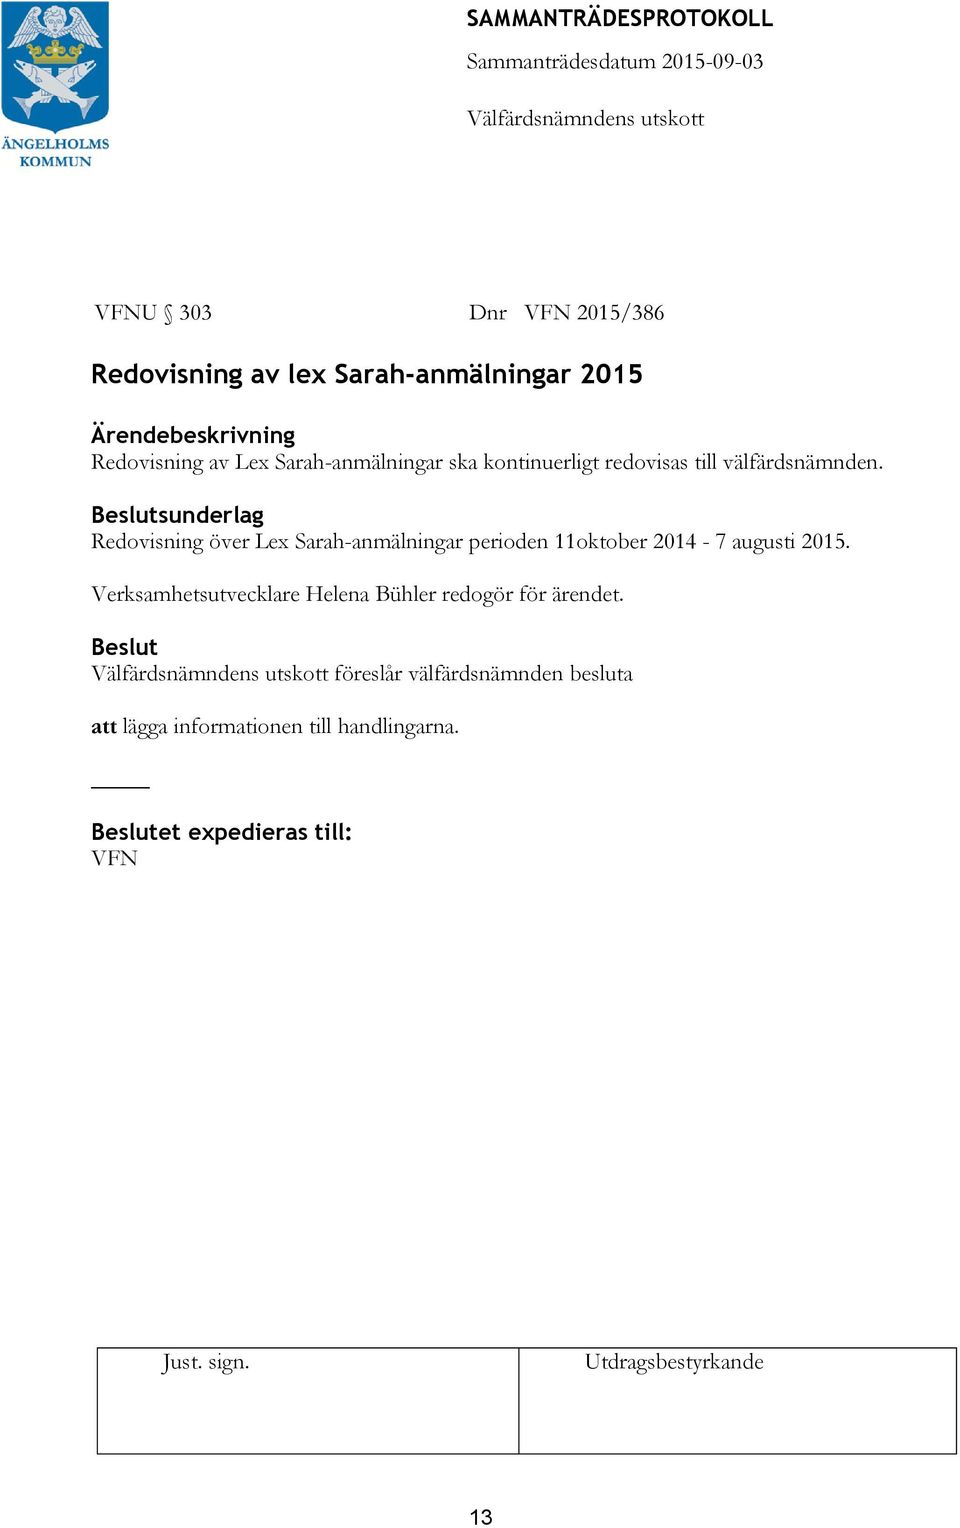 sunderlag Redovisning över Lex Sarah-anmälningar perioden 11oktober 2014-7 augusti 2015.